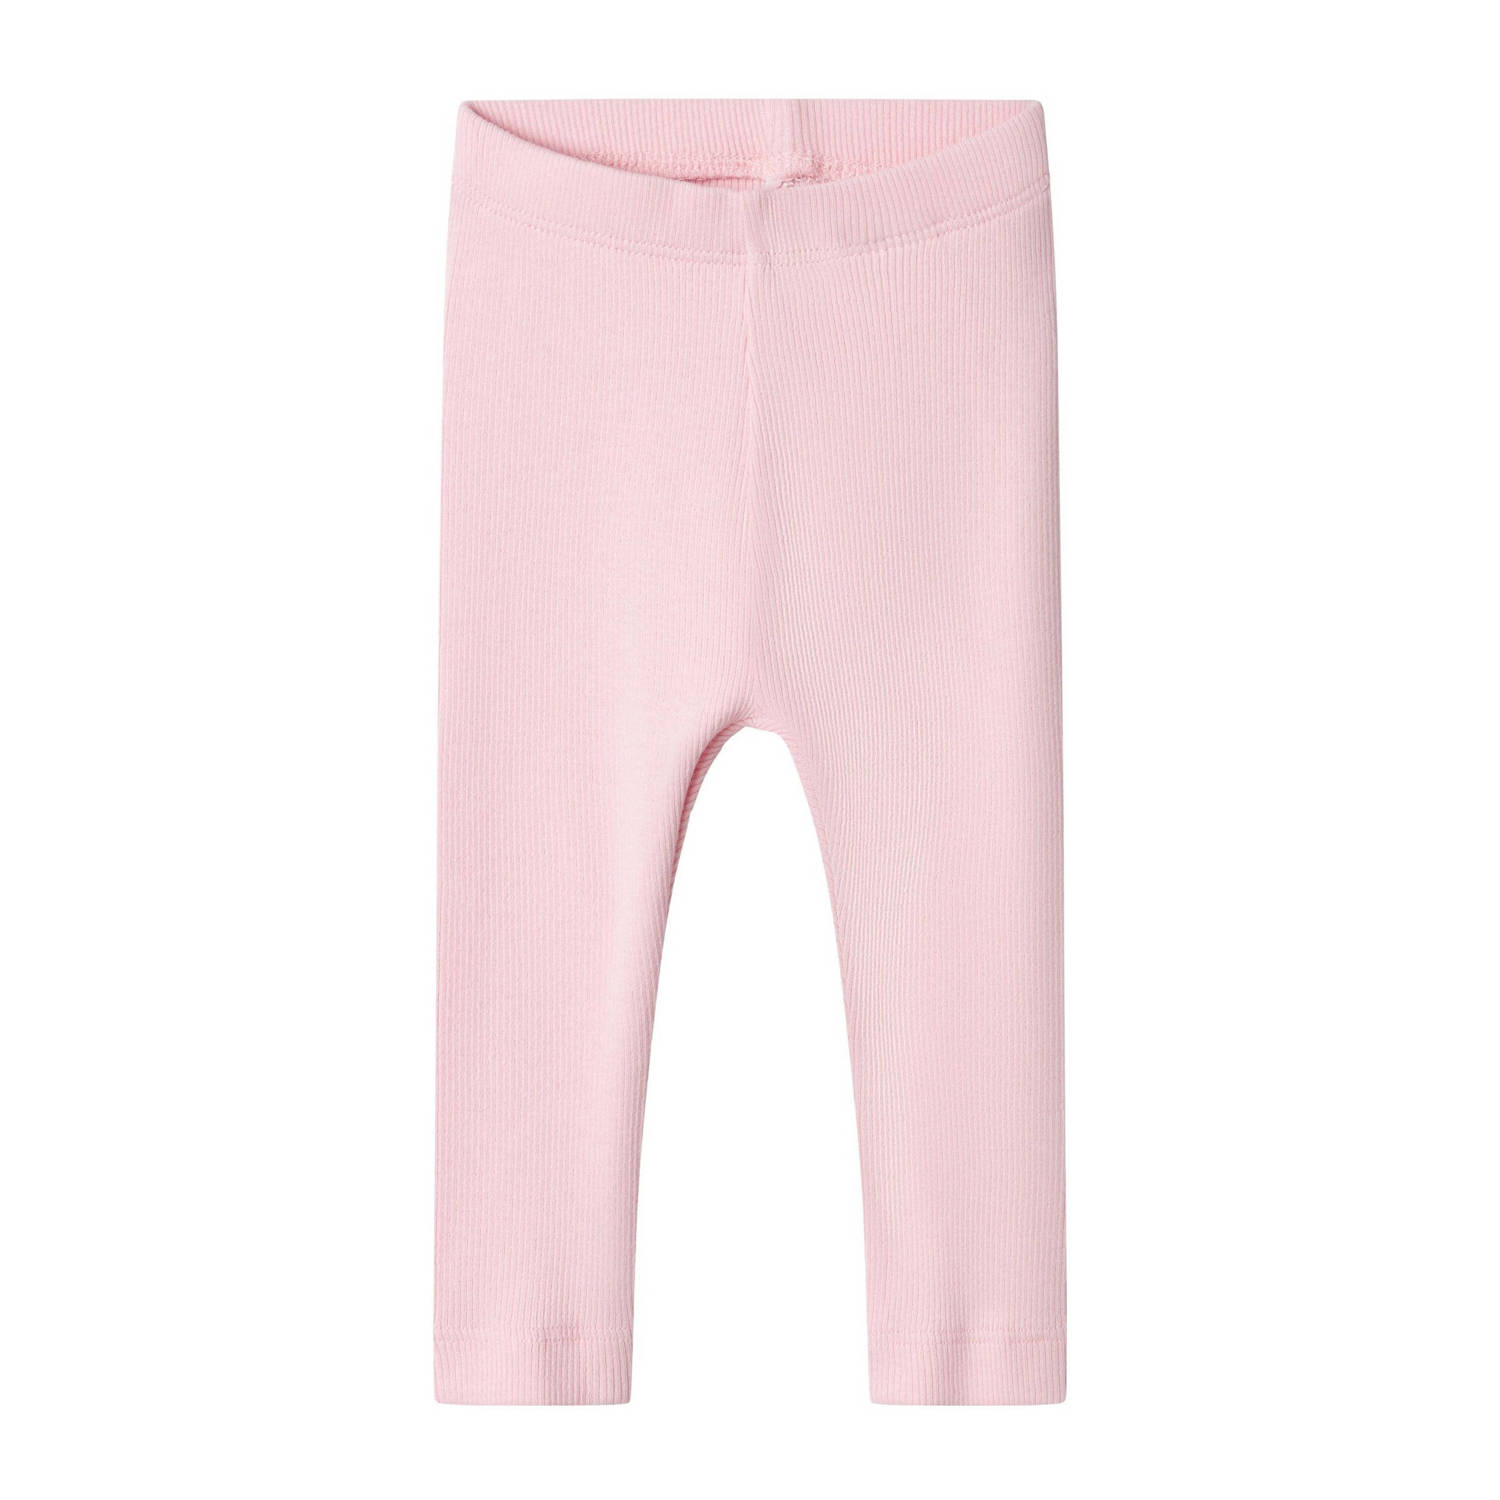 Name it BABY legging NBNKAB parfait pink Broek Roze Stretchkatoen 104